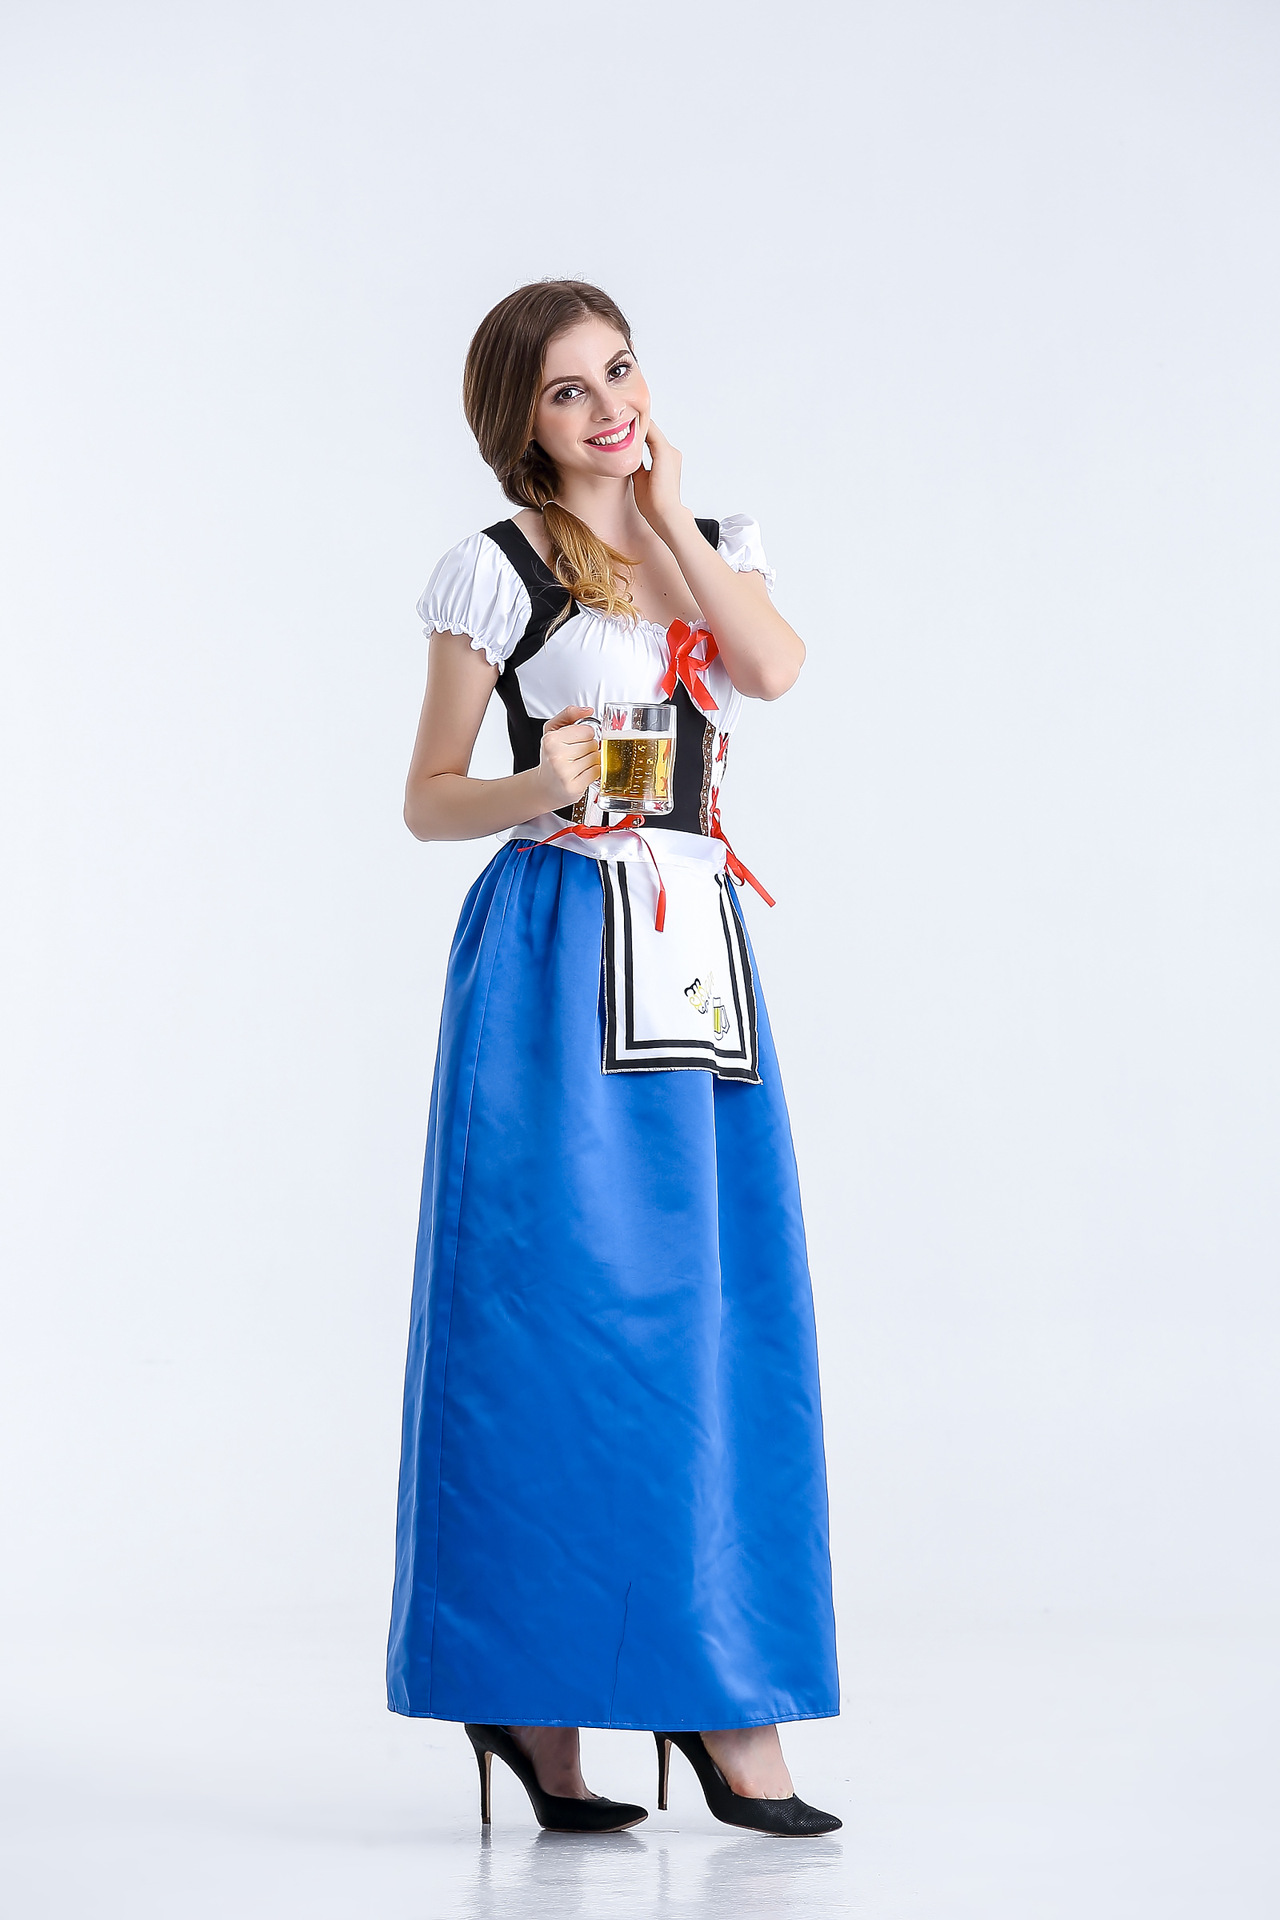 ws德国啤酒节酒娘服装外贸原单巴伐利亚传统服装啤酒女长裙女佣服